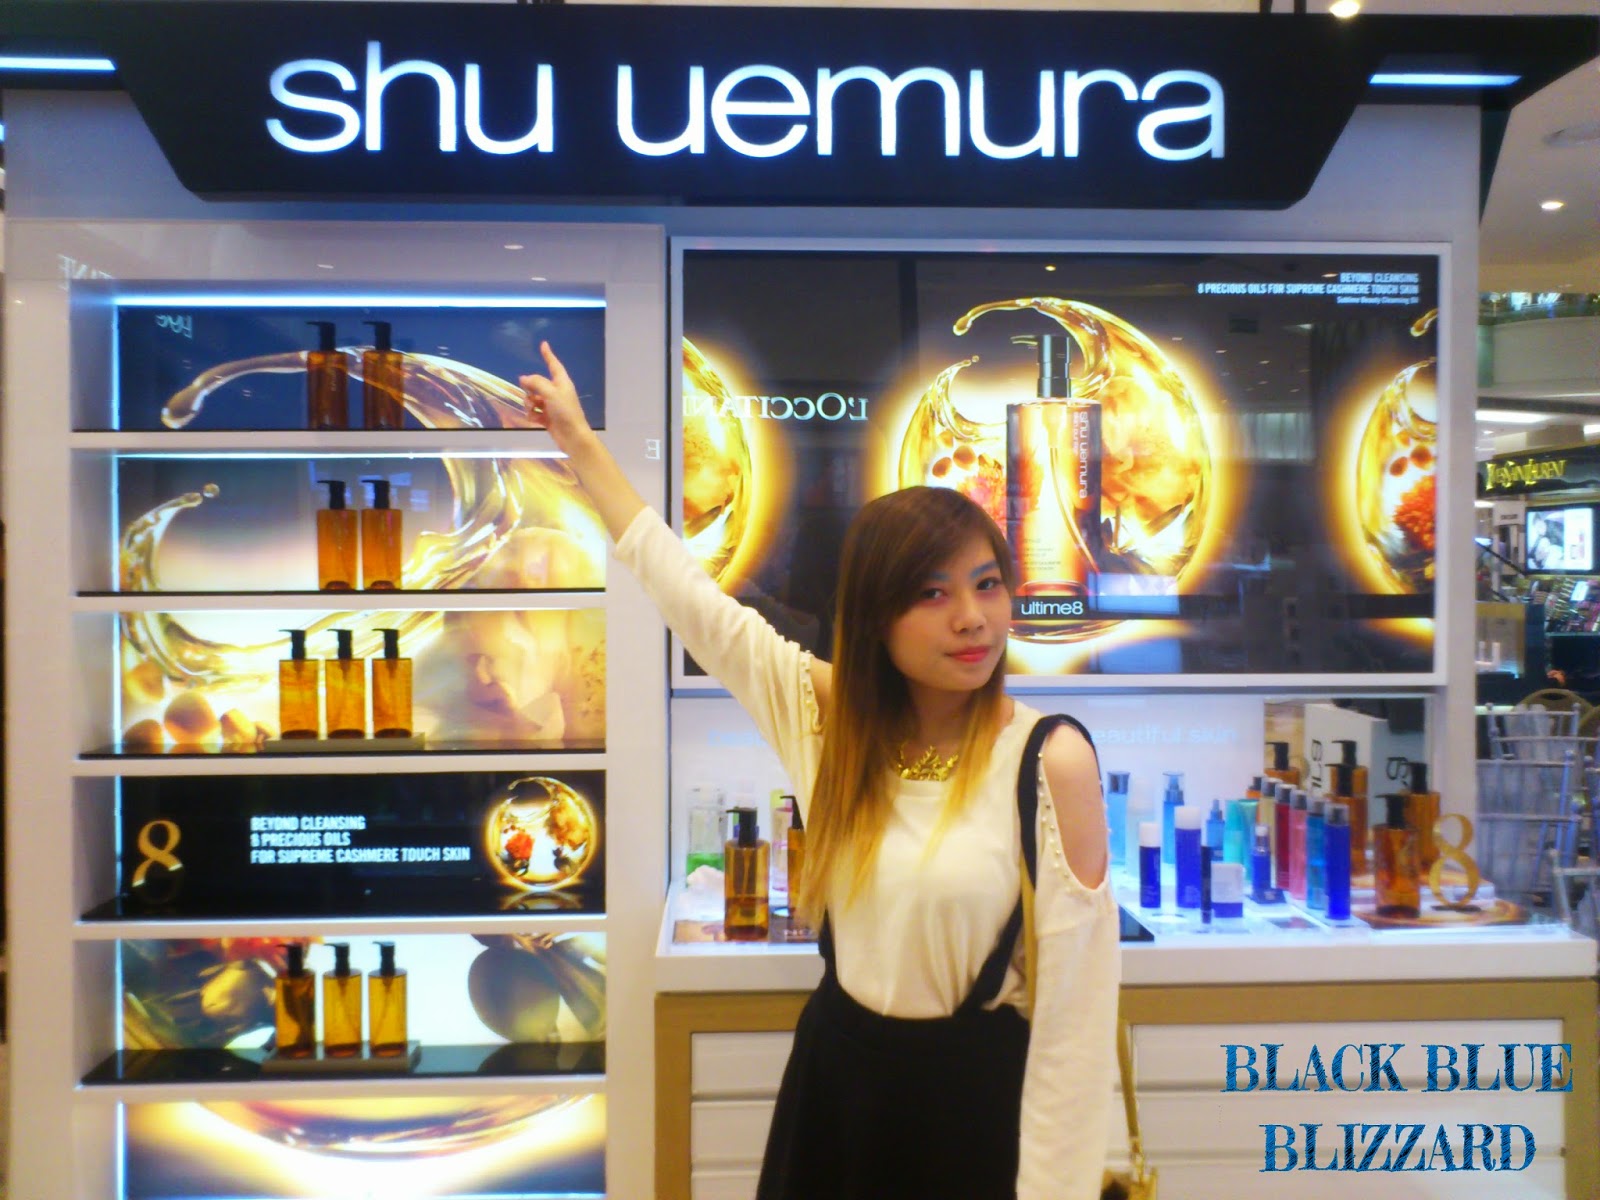 shu uemura indonesia blogger, shu uemura calligraph:ink , shu uemura makeup event